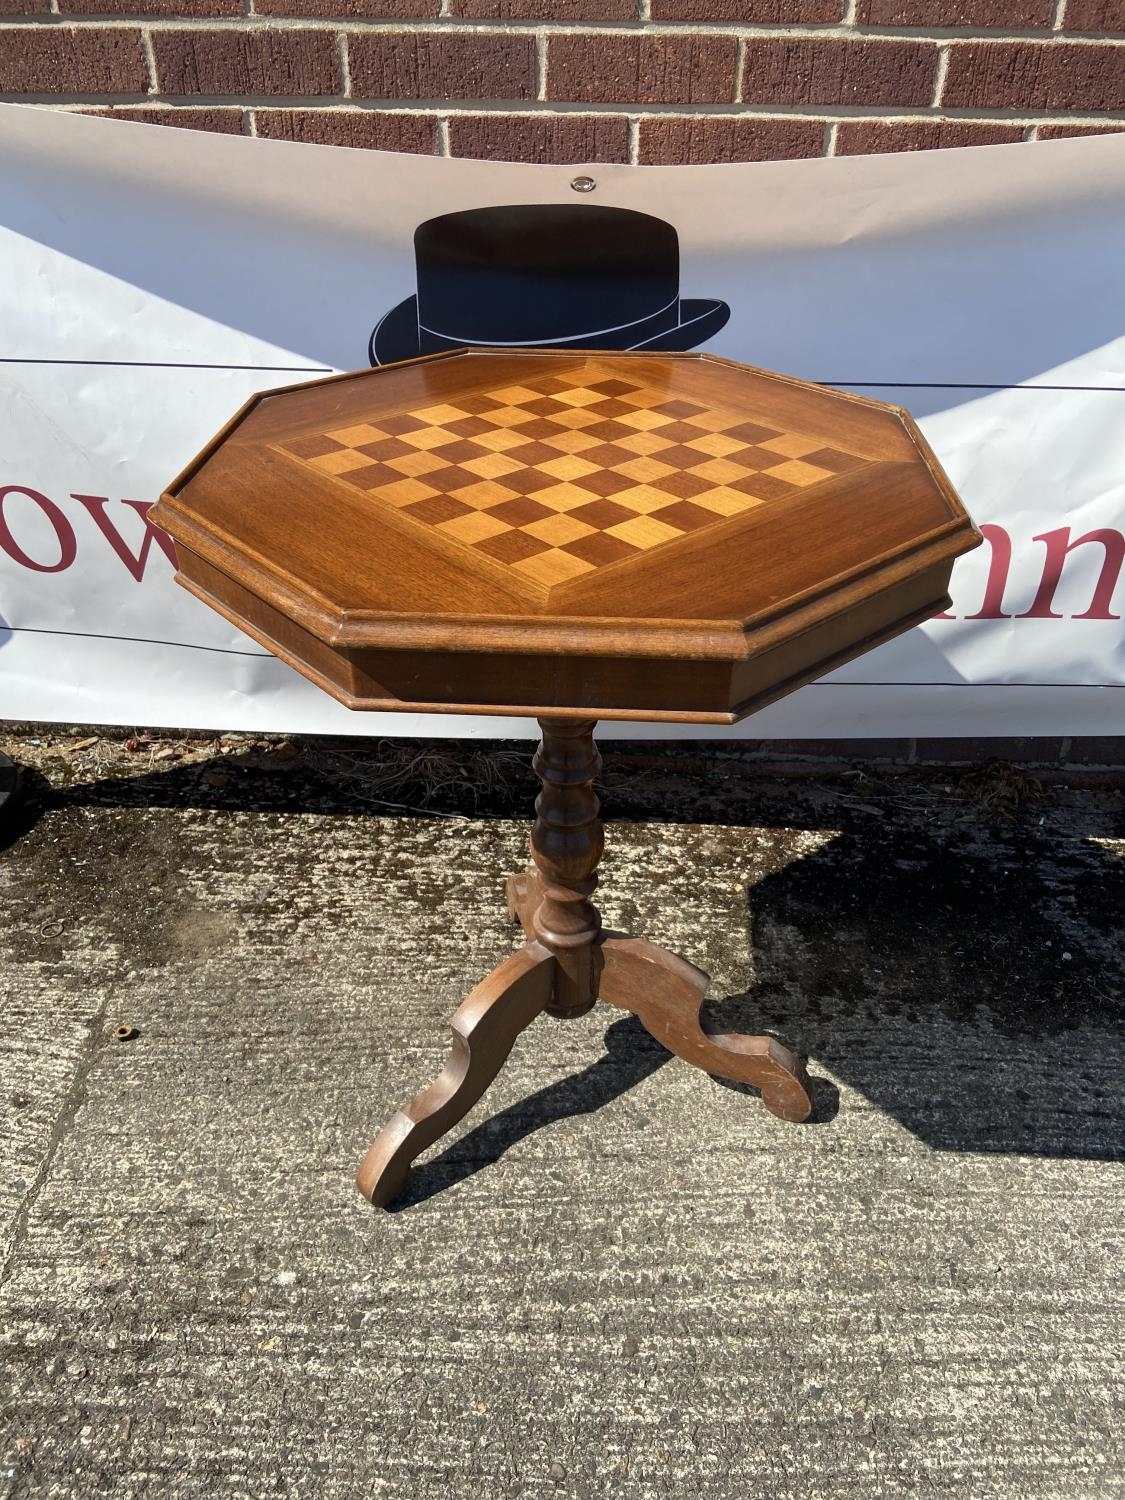 Single pedestal chess board top table [69x59x59cm]